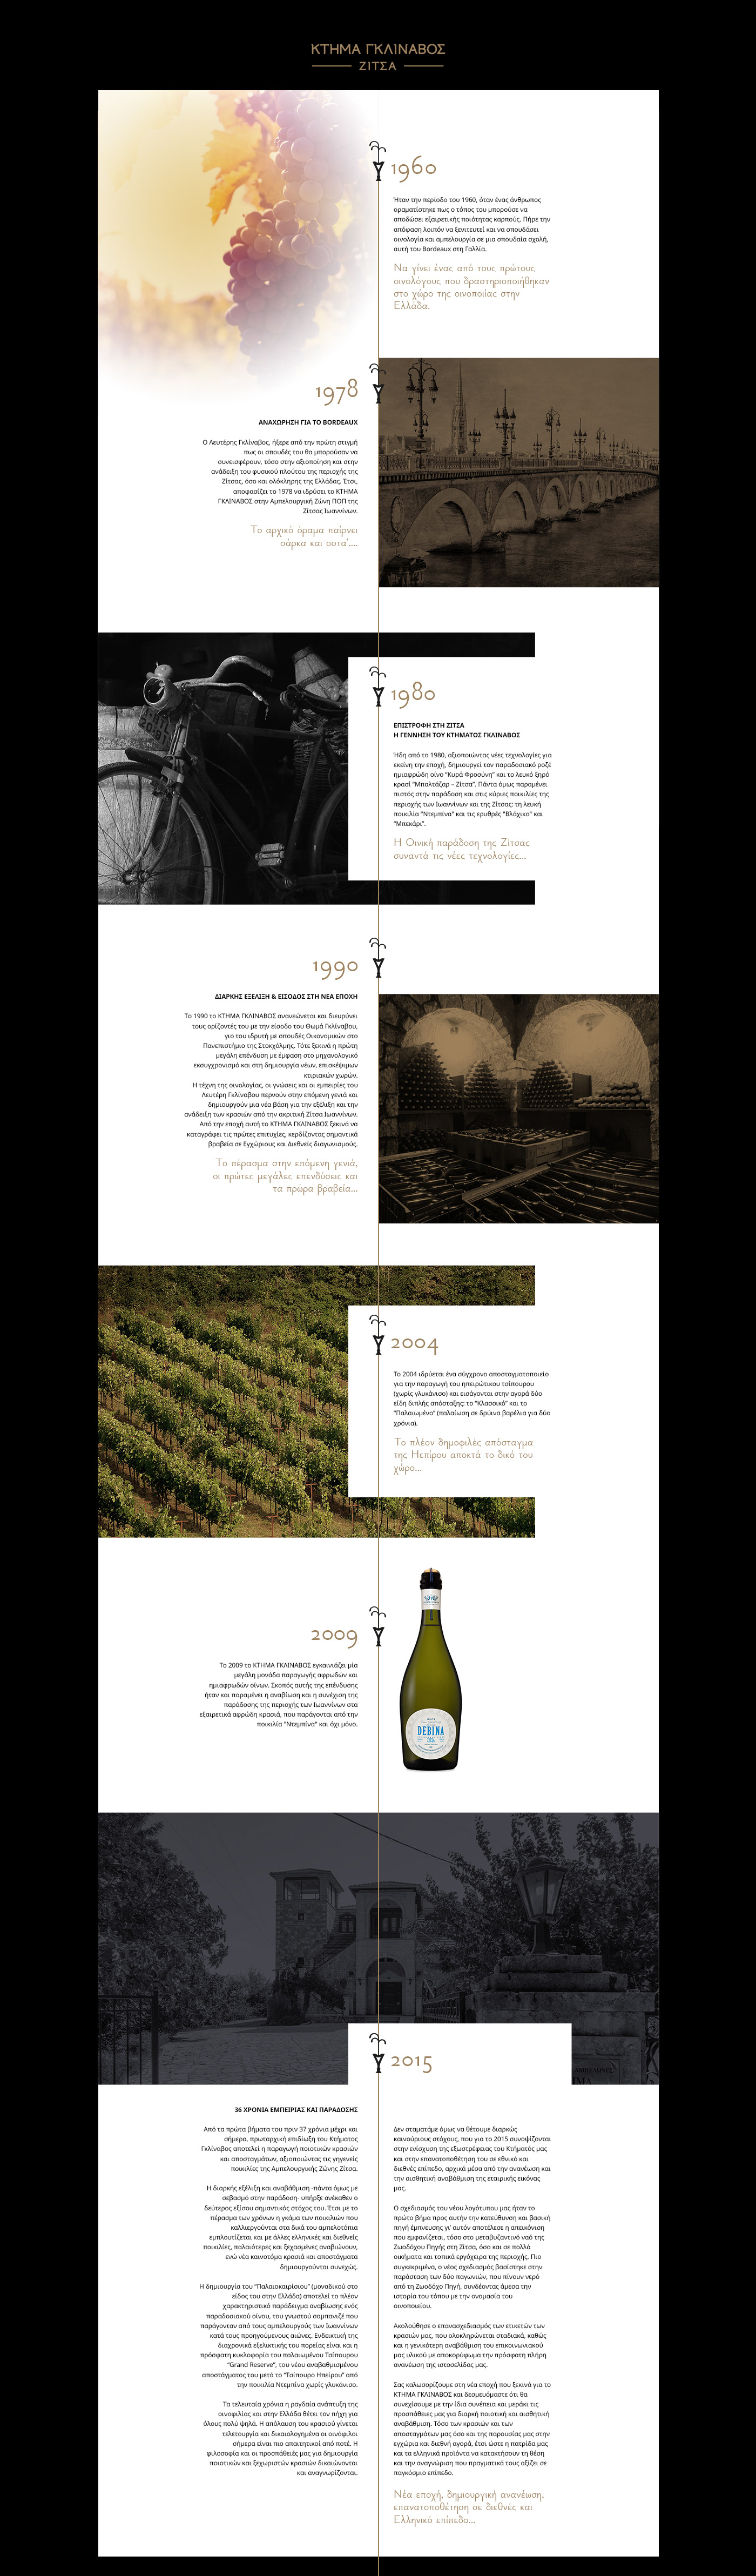 Web Design  Responsive graphic design  wine e-shop Greece Glinavos WINE DISTILLERIES ioannina Website